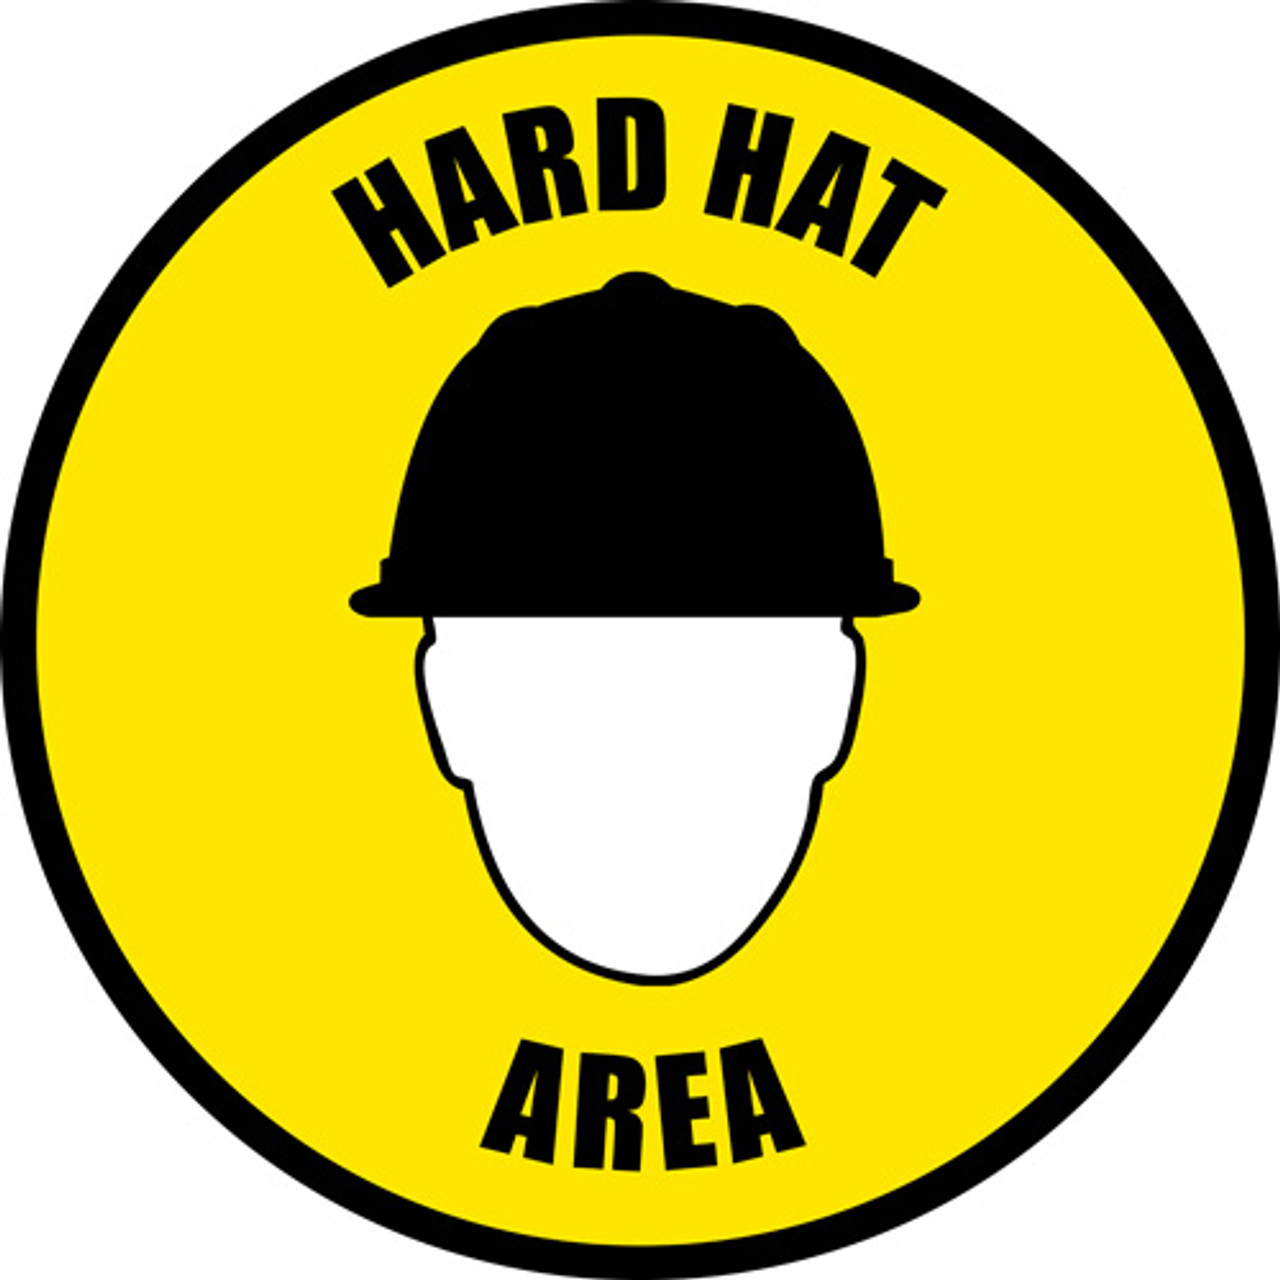 Hard attention. Hard hat sign. Hard hat area signs. Дорожный знак шляпа. Знак Рet 01.